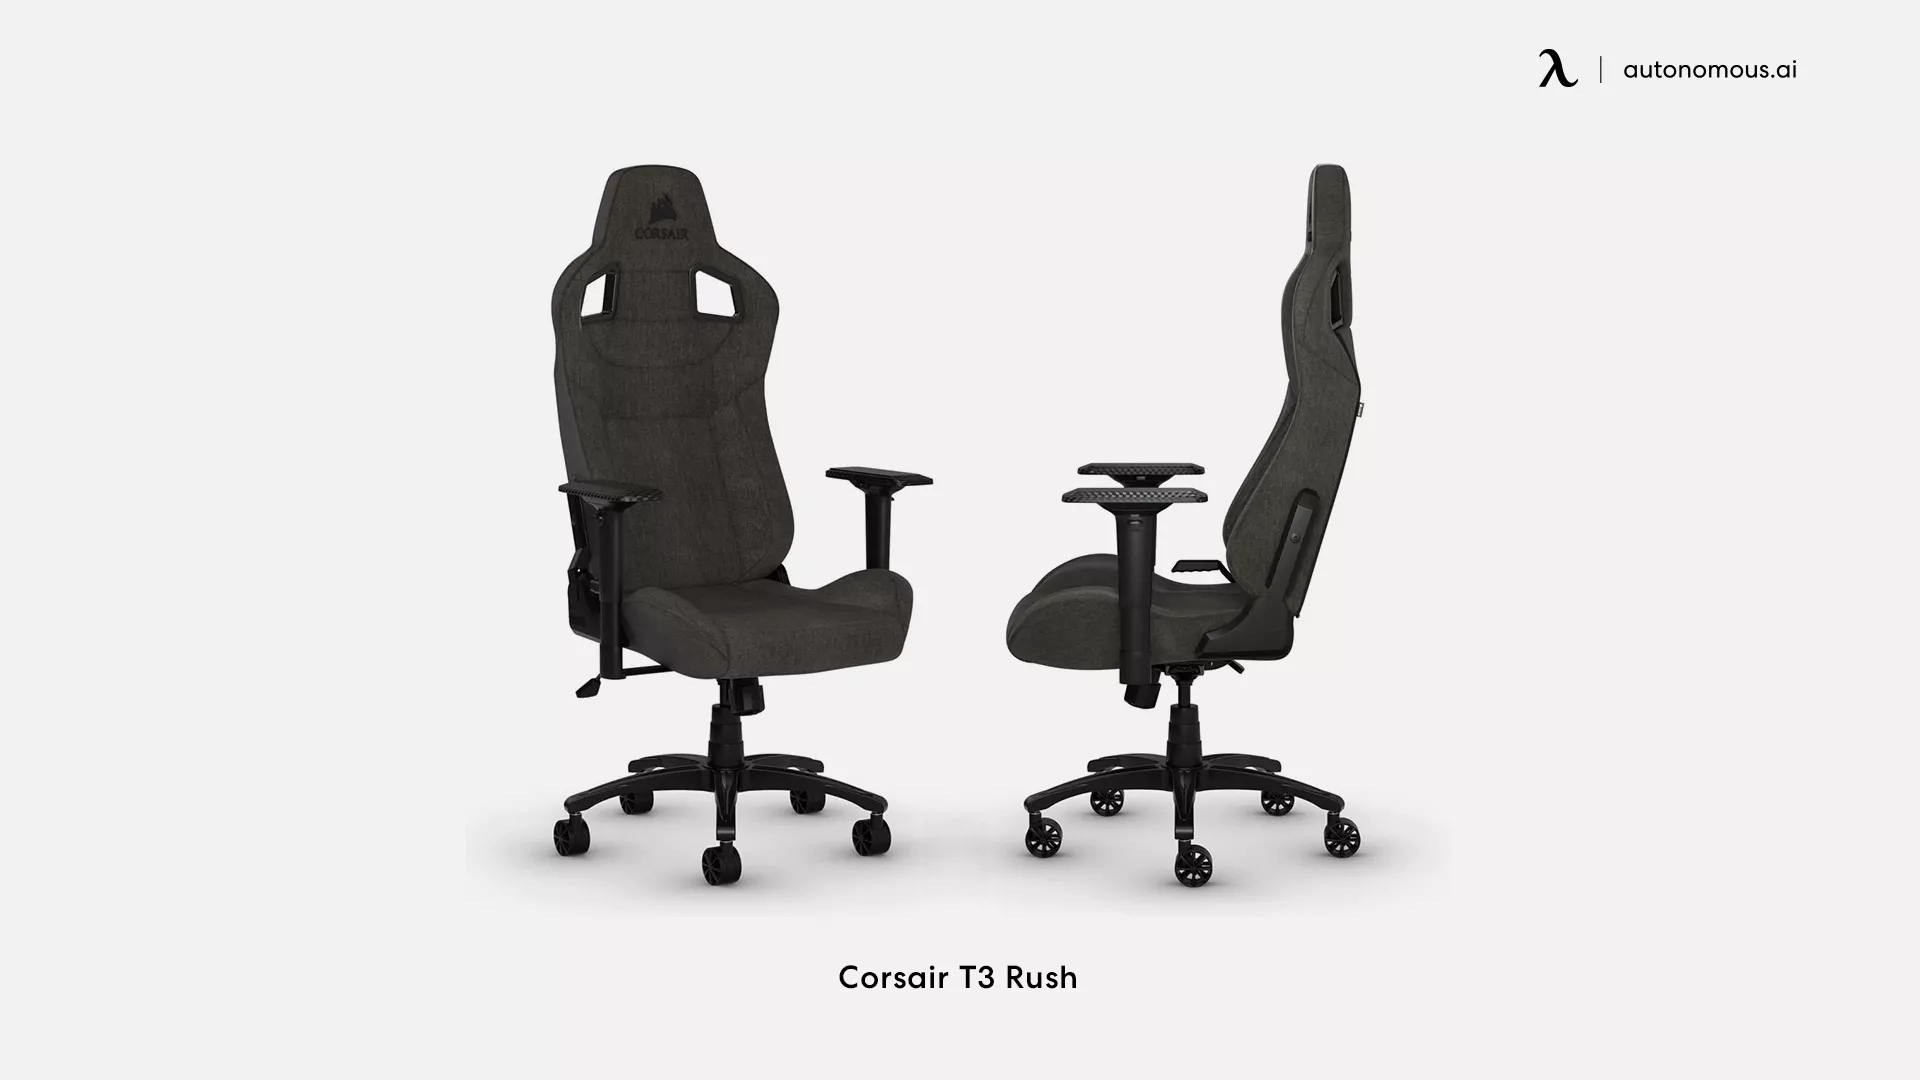 Corsair T3 Rush computer gaming chair